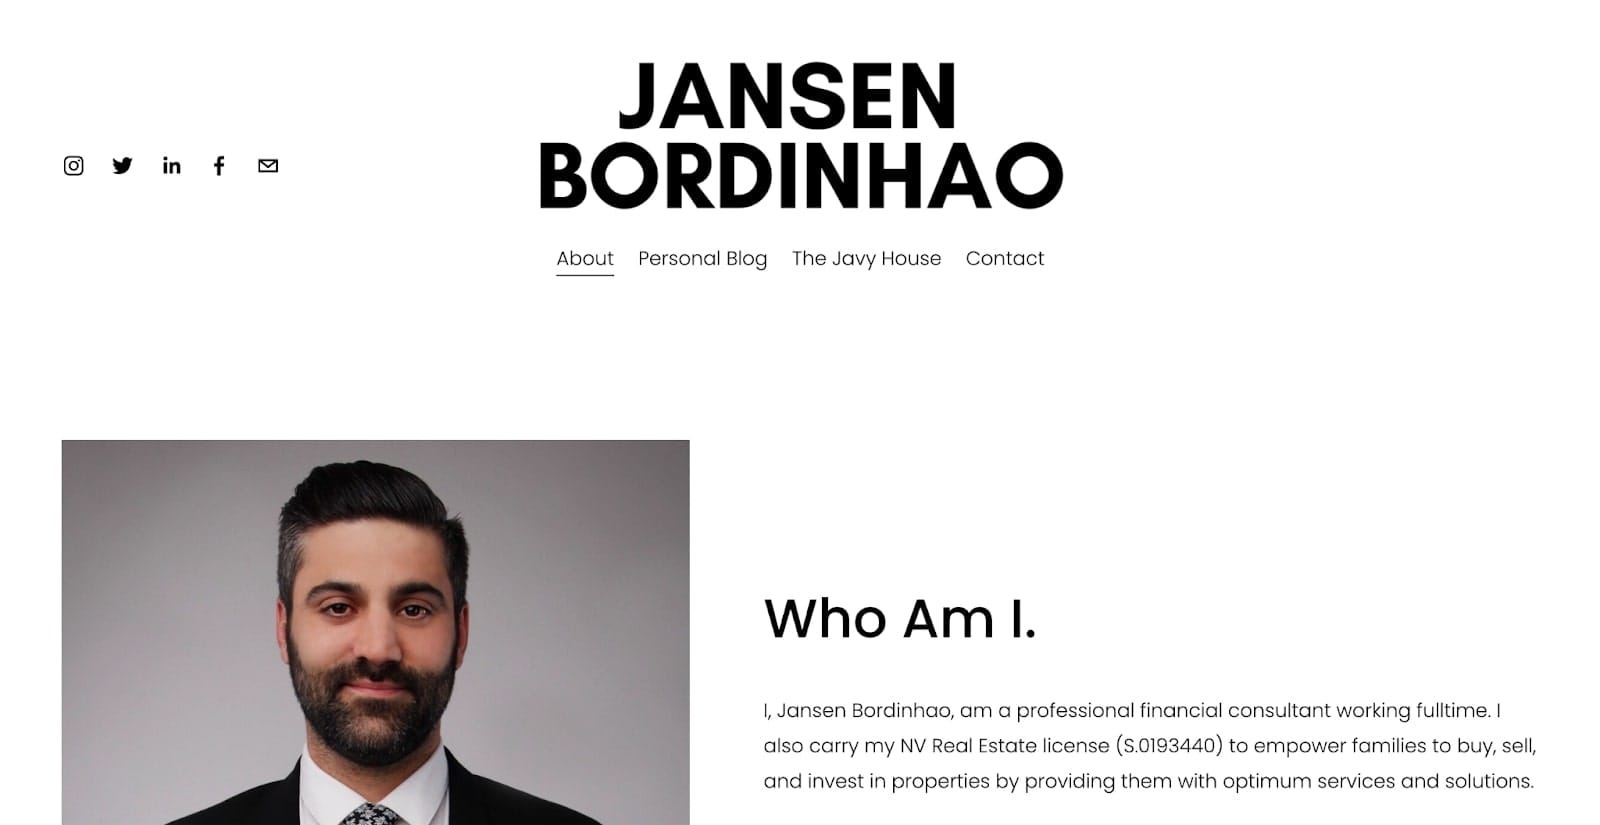 Jansen Bordinhao's website